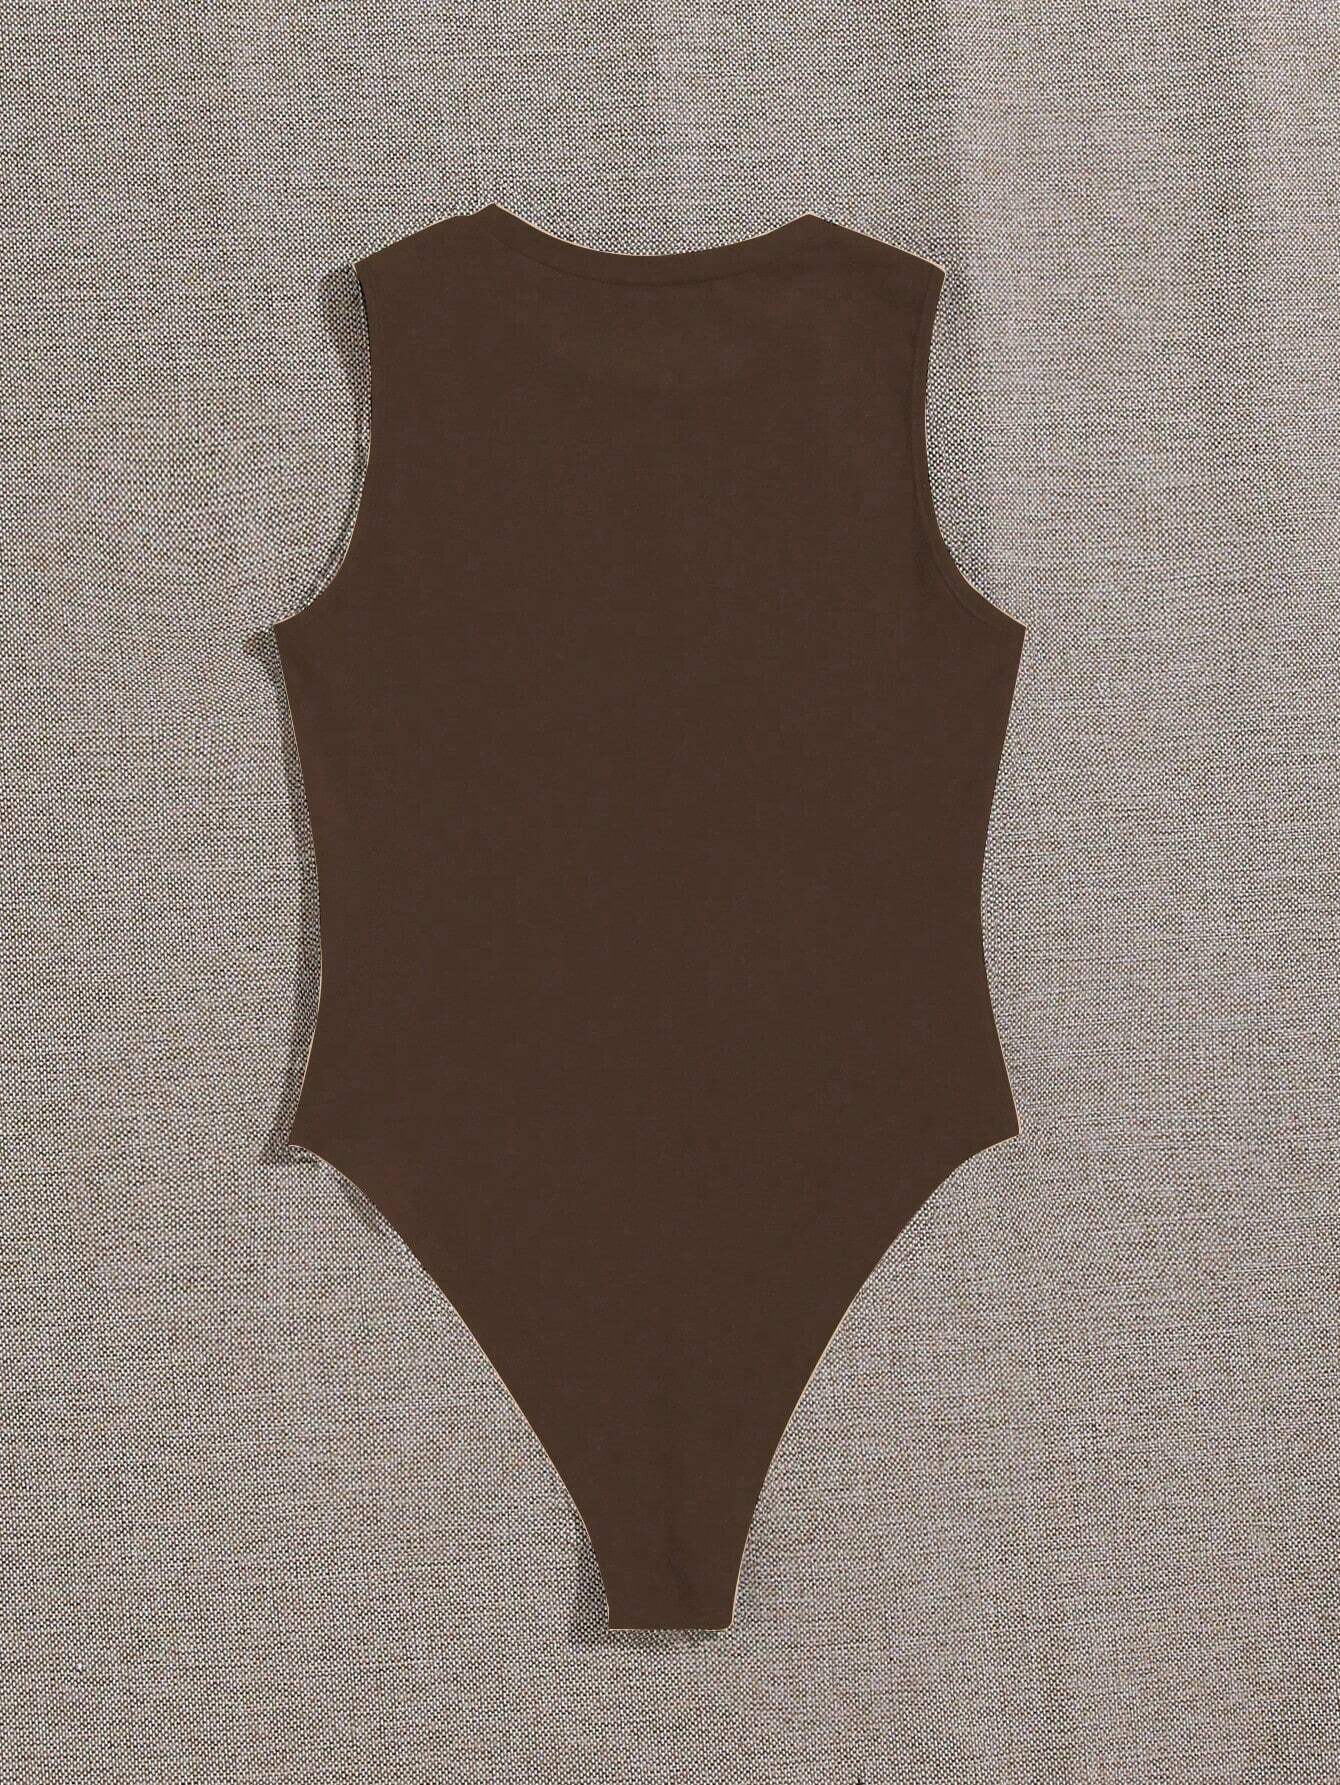 Women's Summer Letter Printed Round Neck Casual Sleeveless Bodysuit